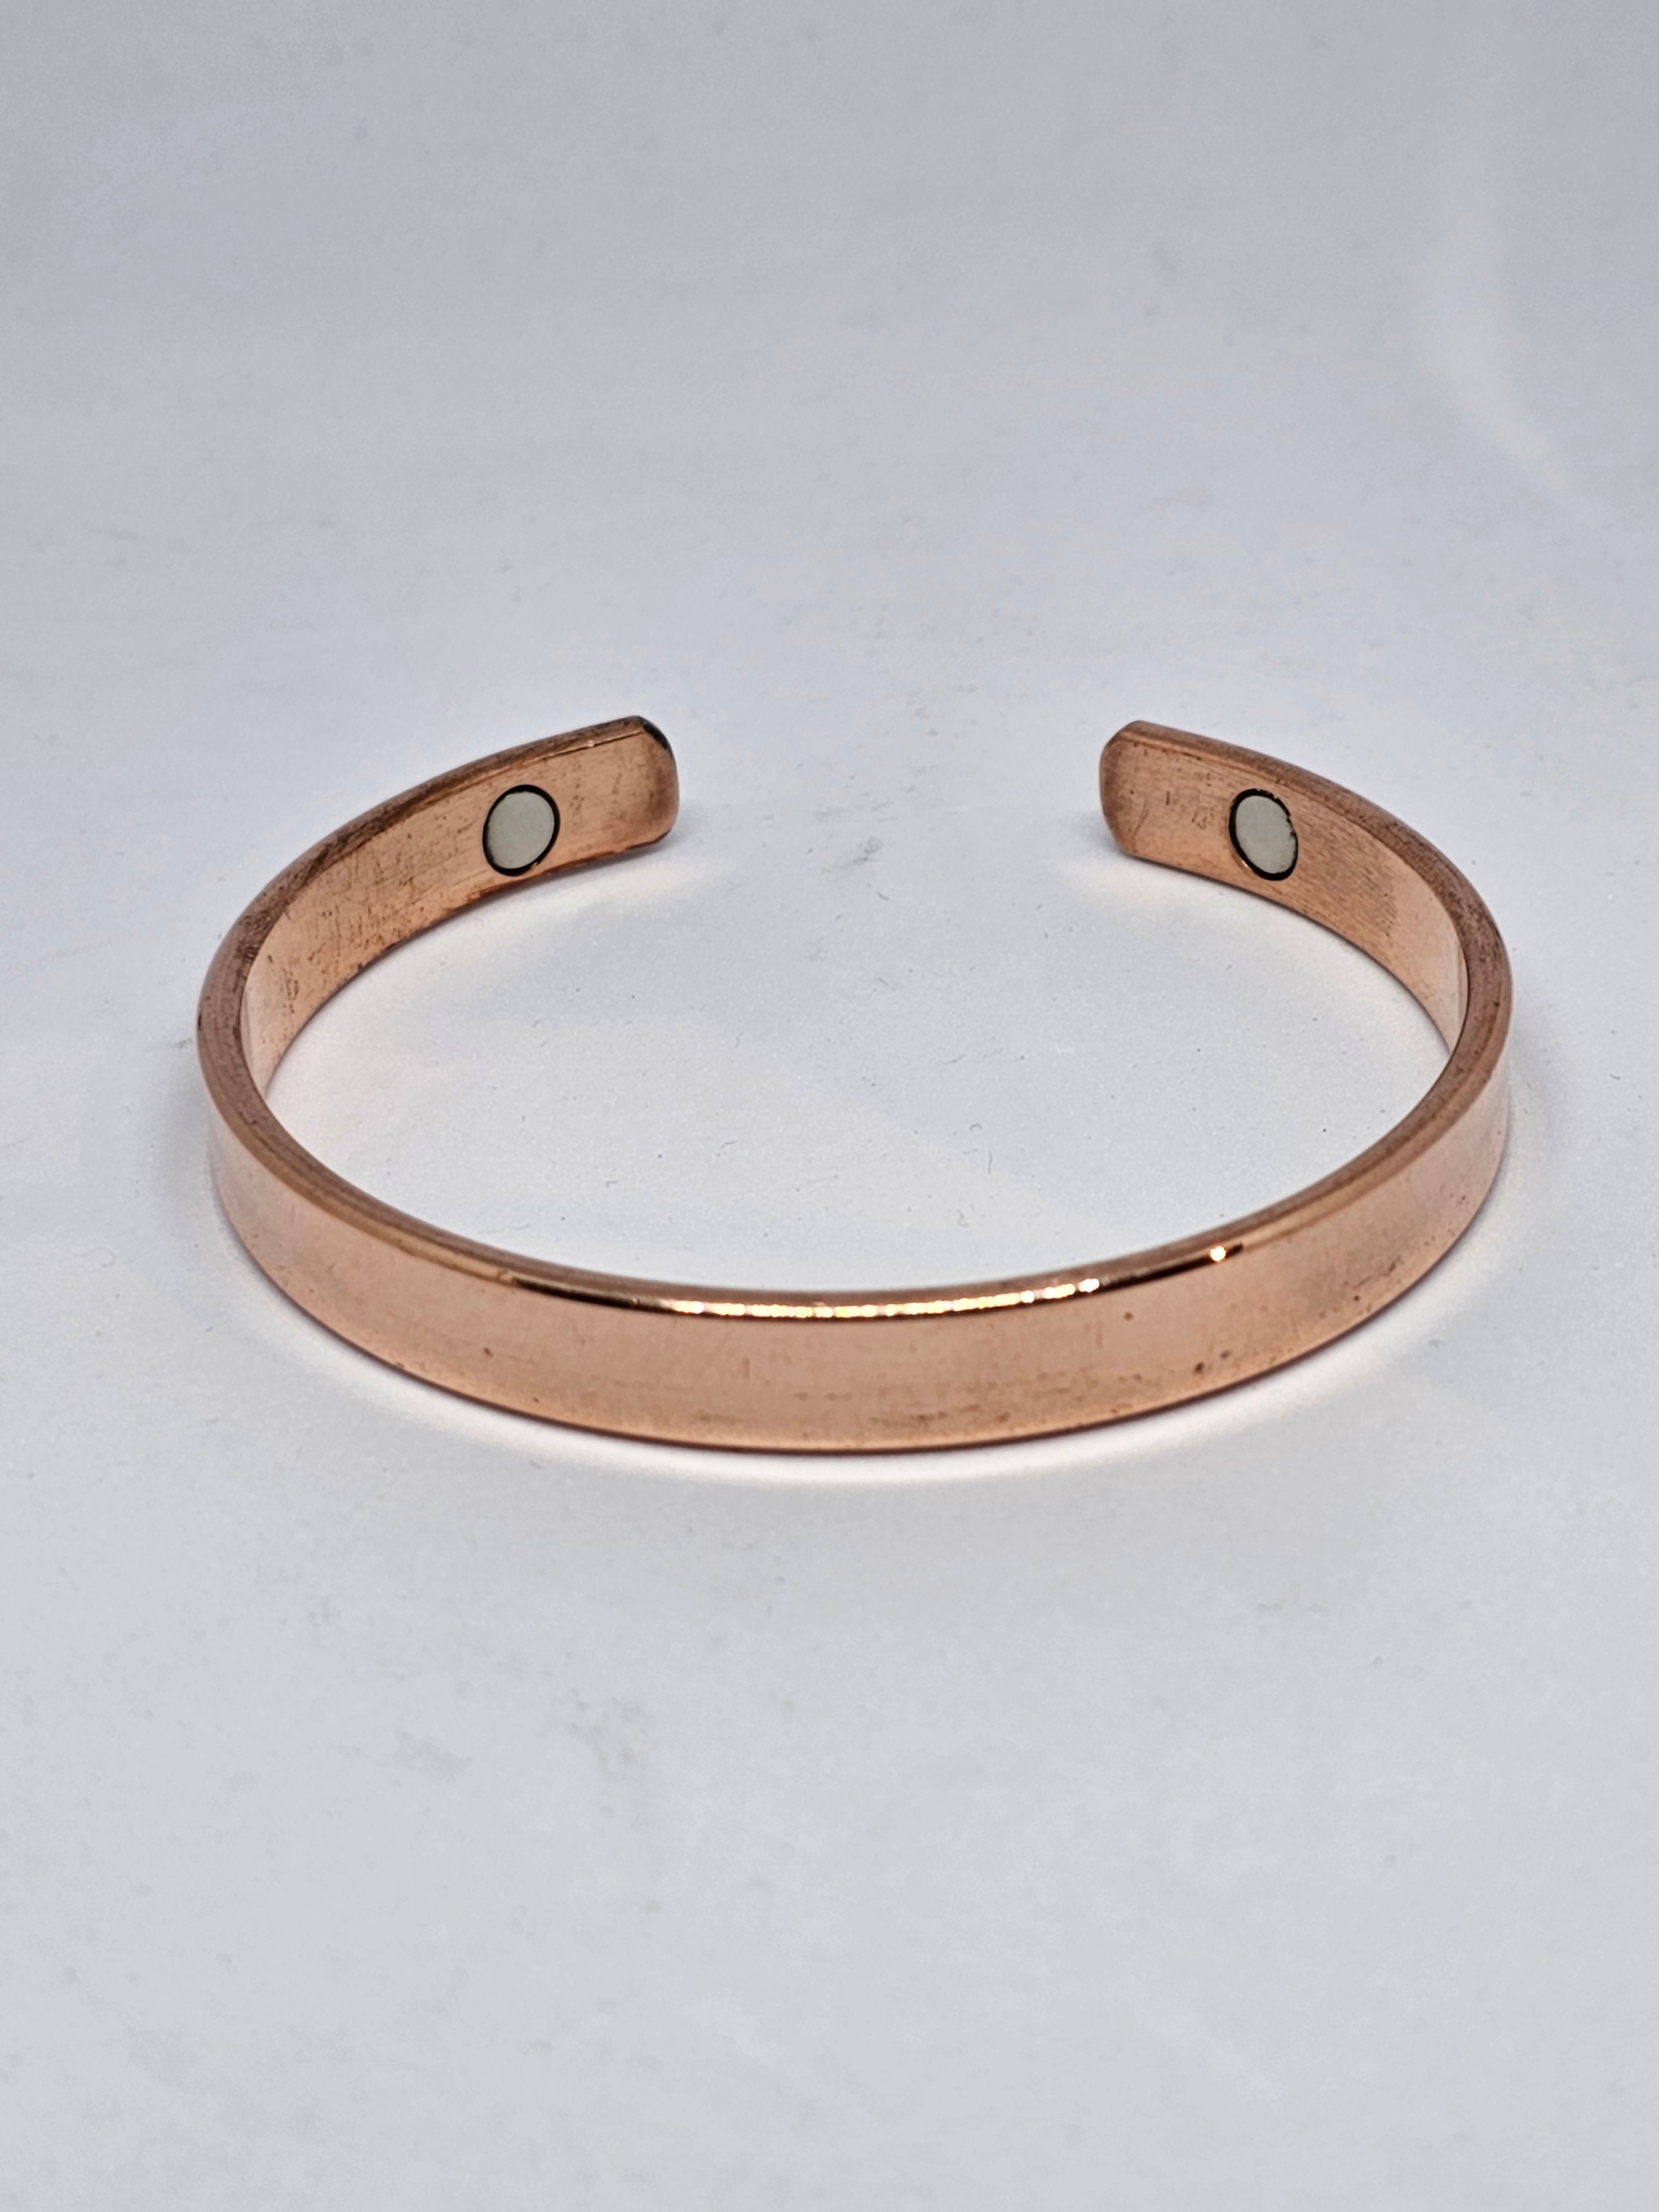 Handmade Pure Copper Magnetic Bracelet - Rivendell Shop